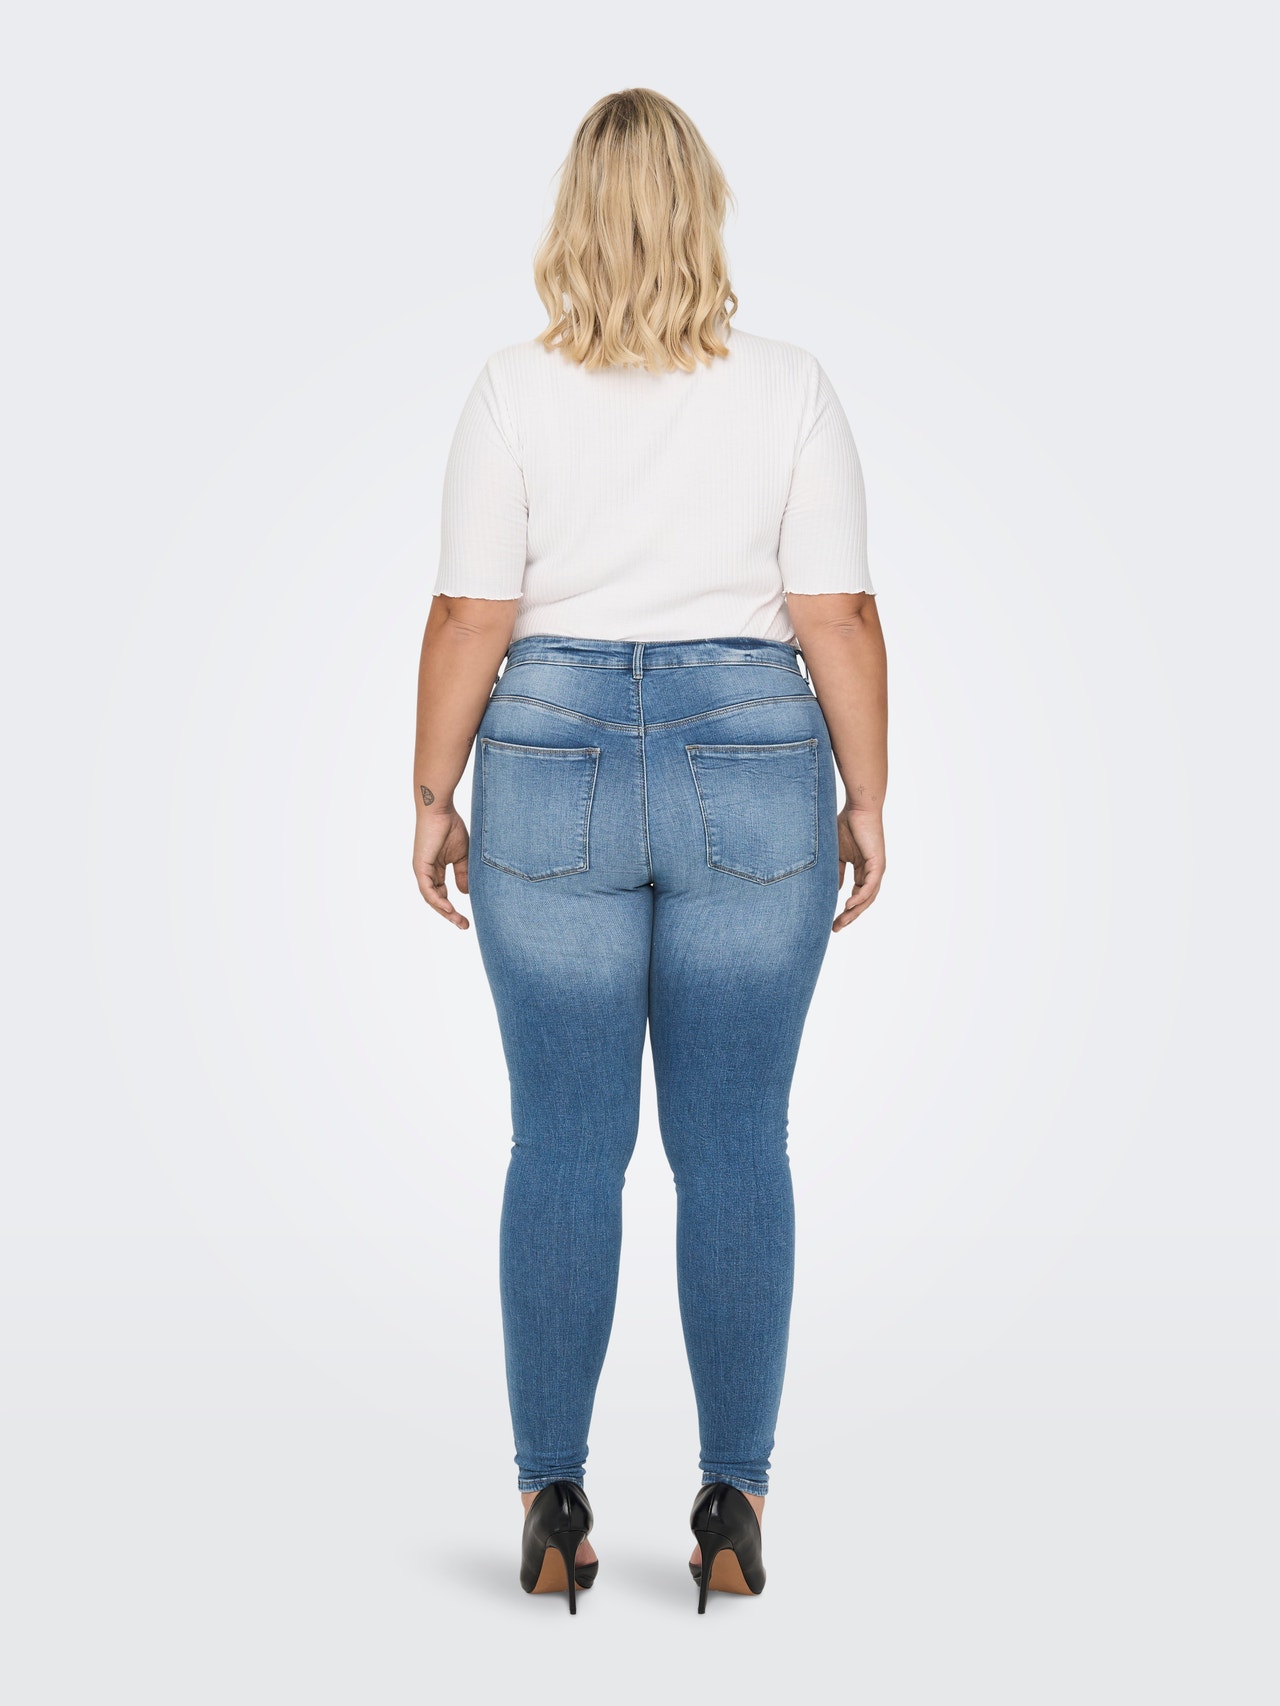 Indigo Blue Jeggings - Light Weight Jeans - Hard Wash, MakeYourOwnJeans®